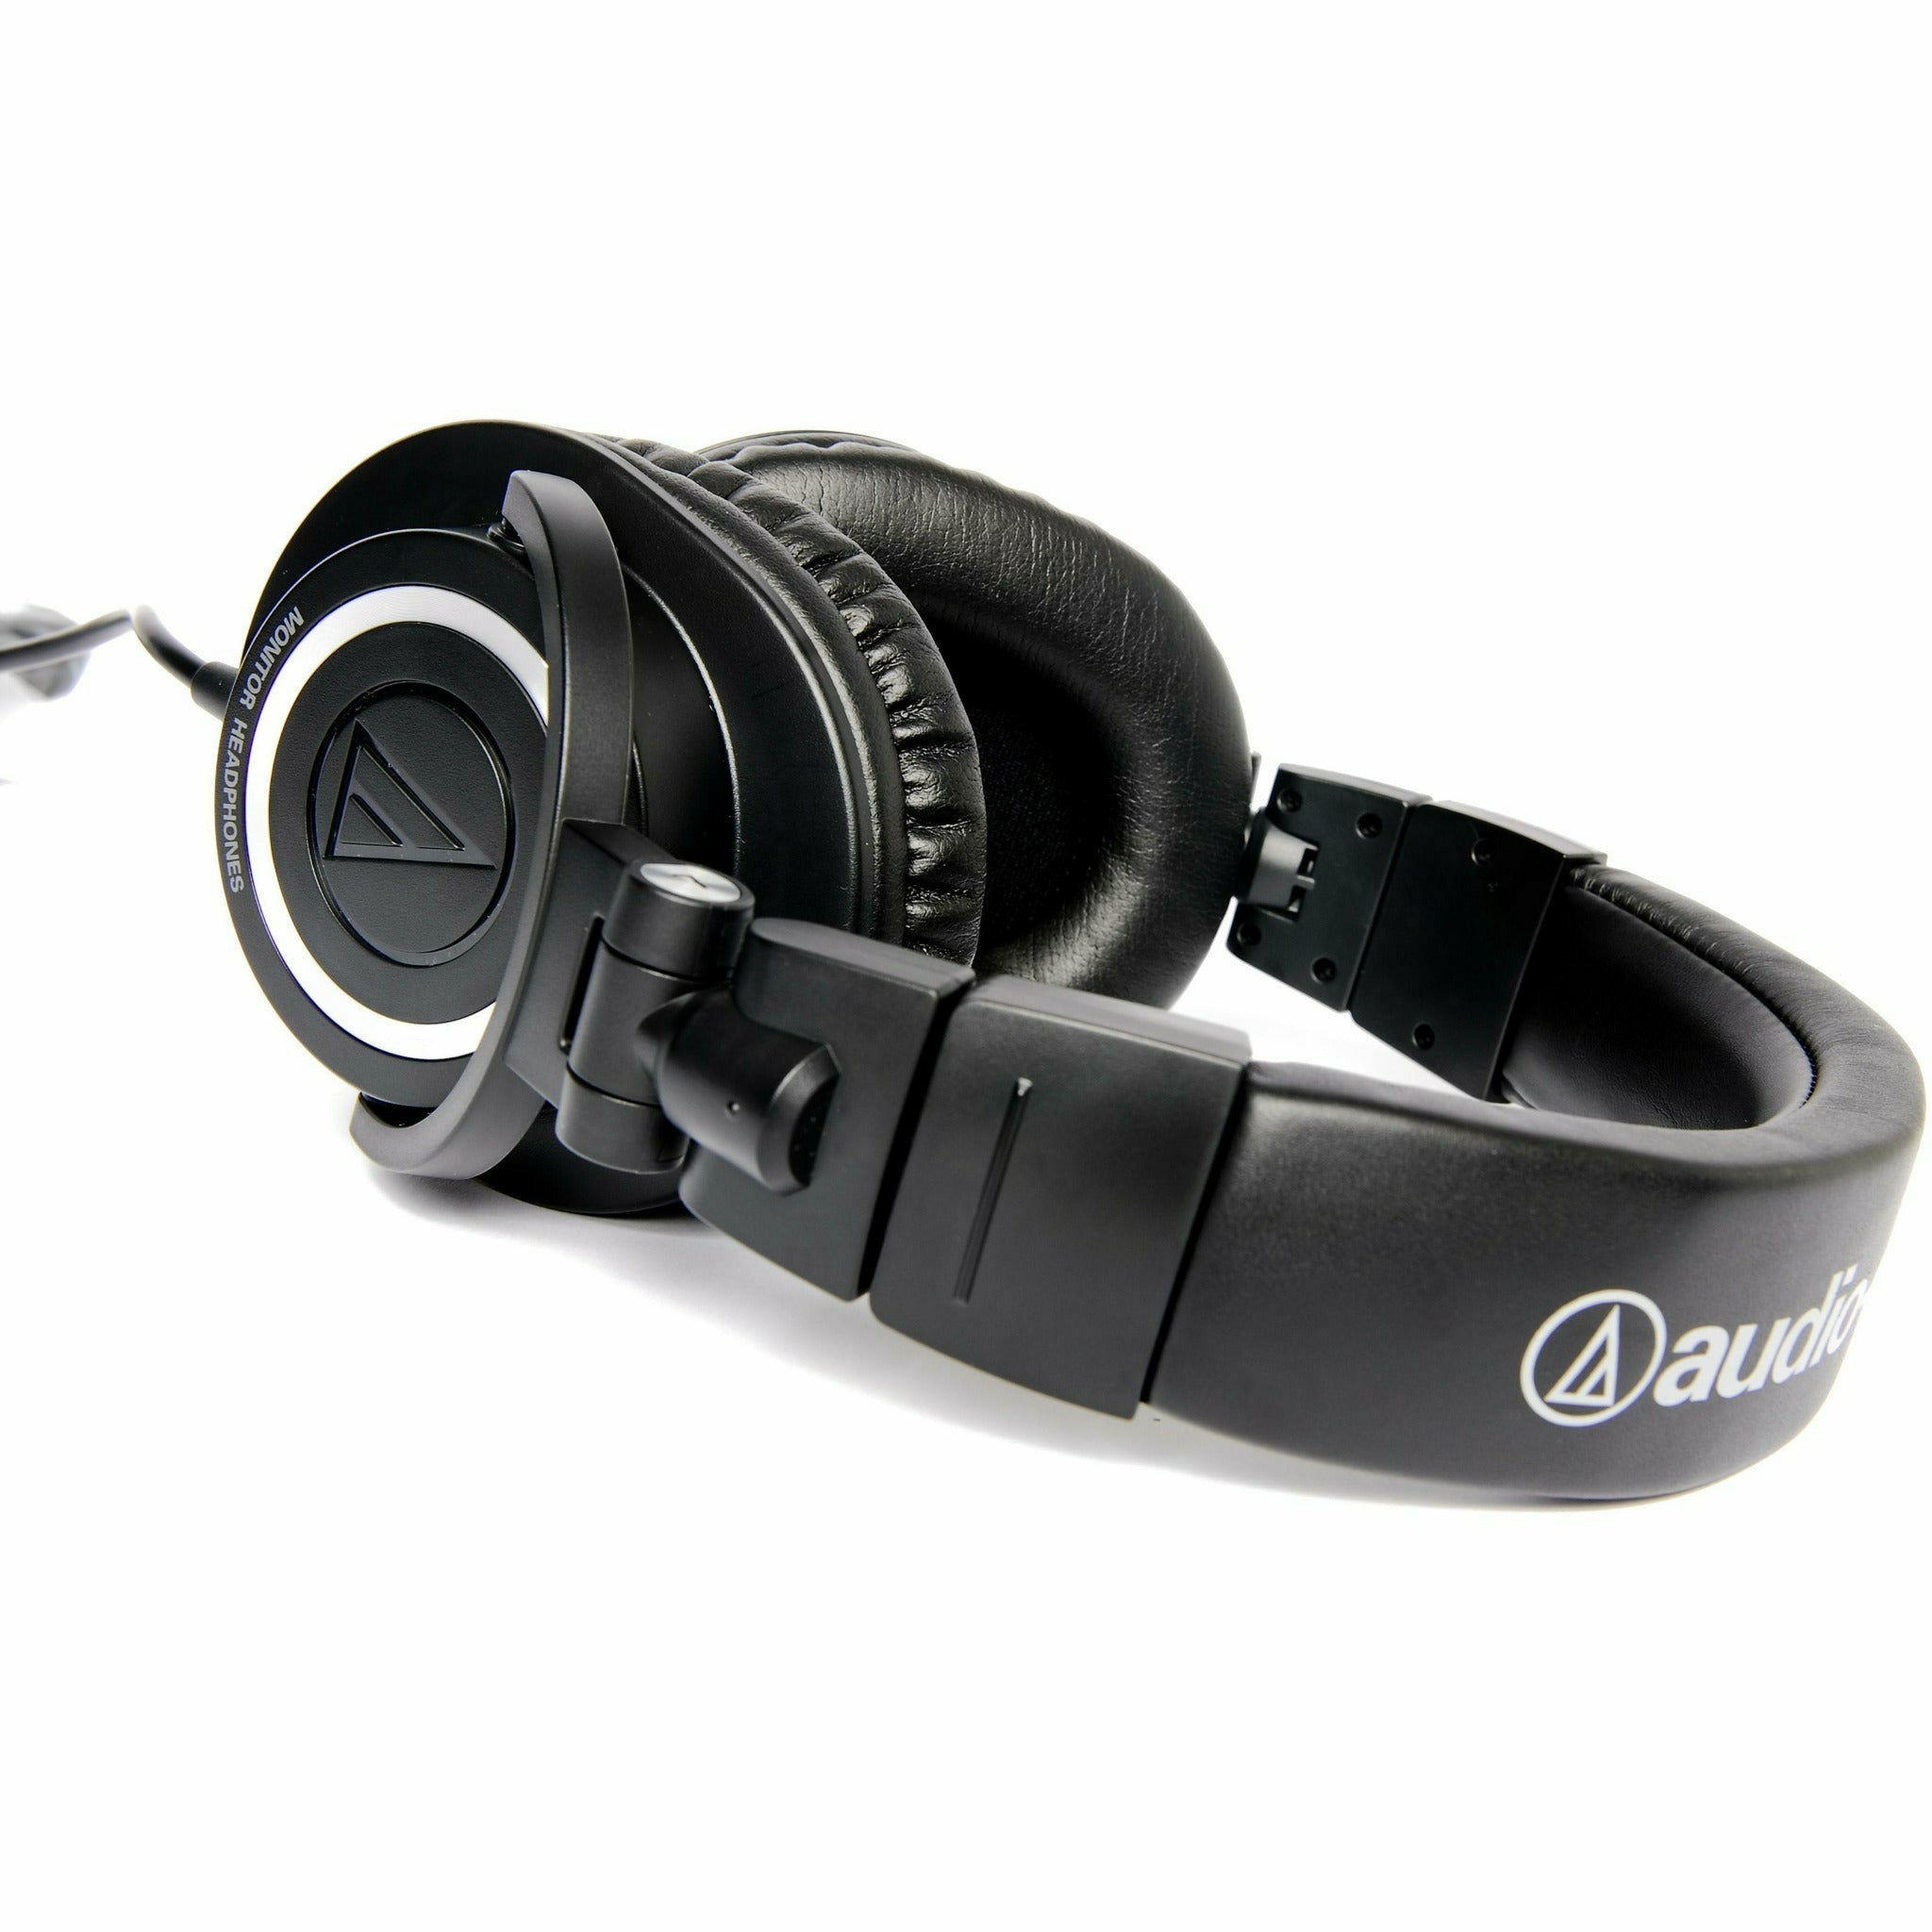 Audio-Technica ATH-M50x Monitor Headphones (Black) - Dragon Image